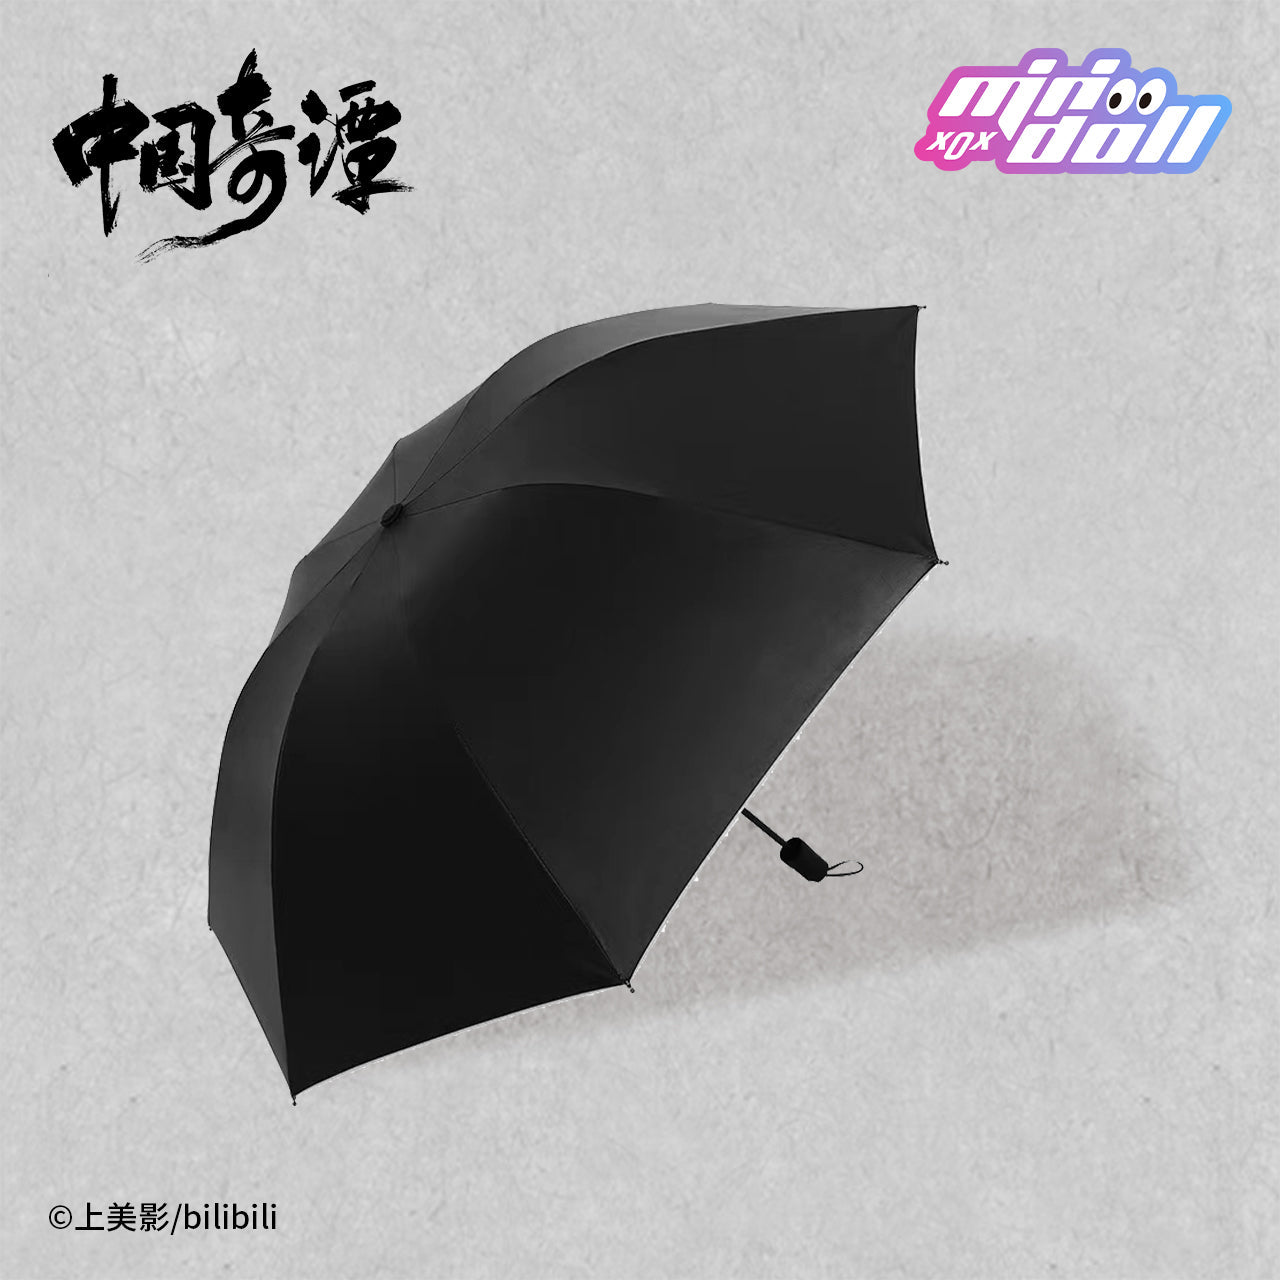 Chinese Strange Tales Goose Manual Folding Umbrella 11694:399951